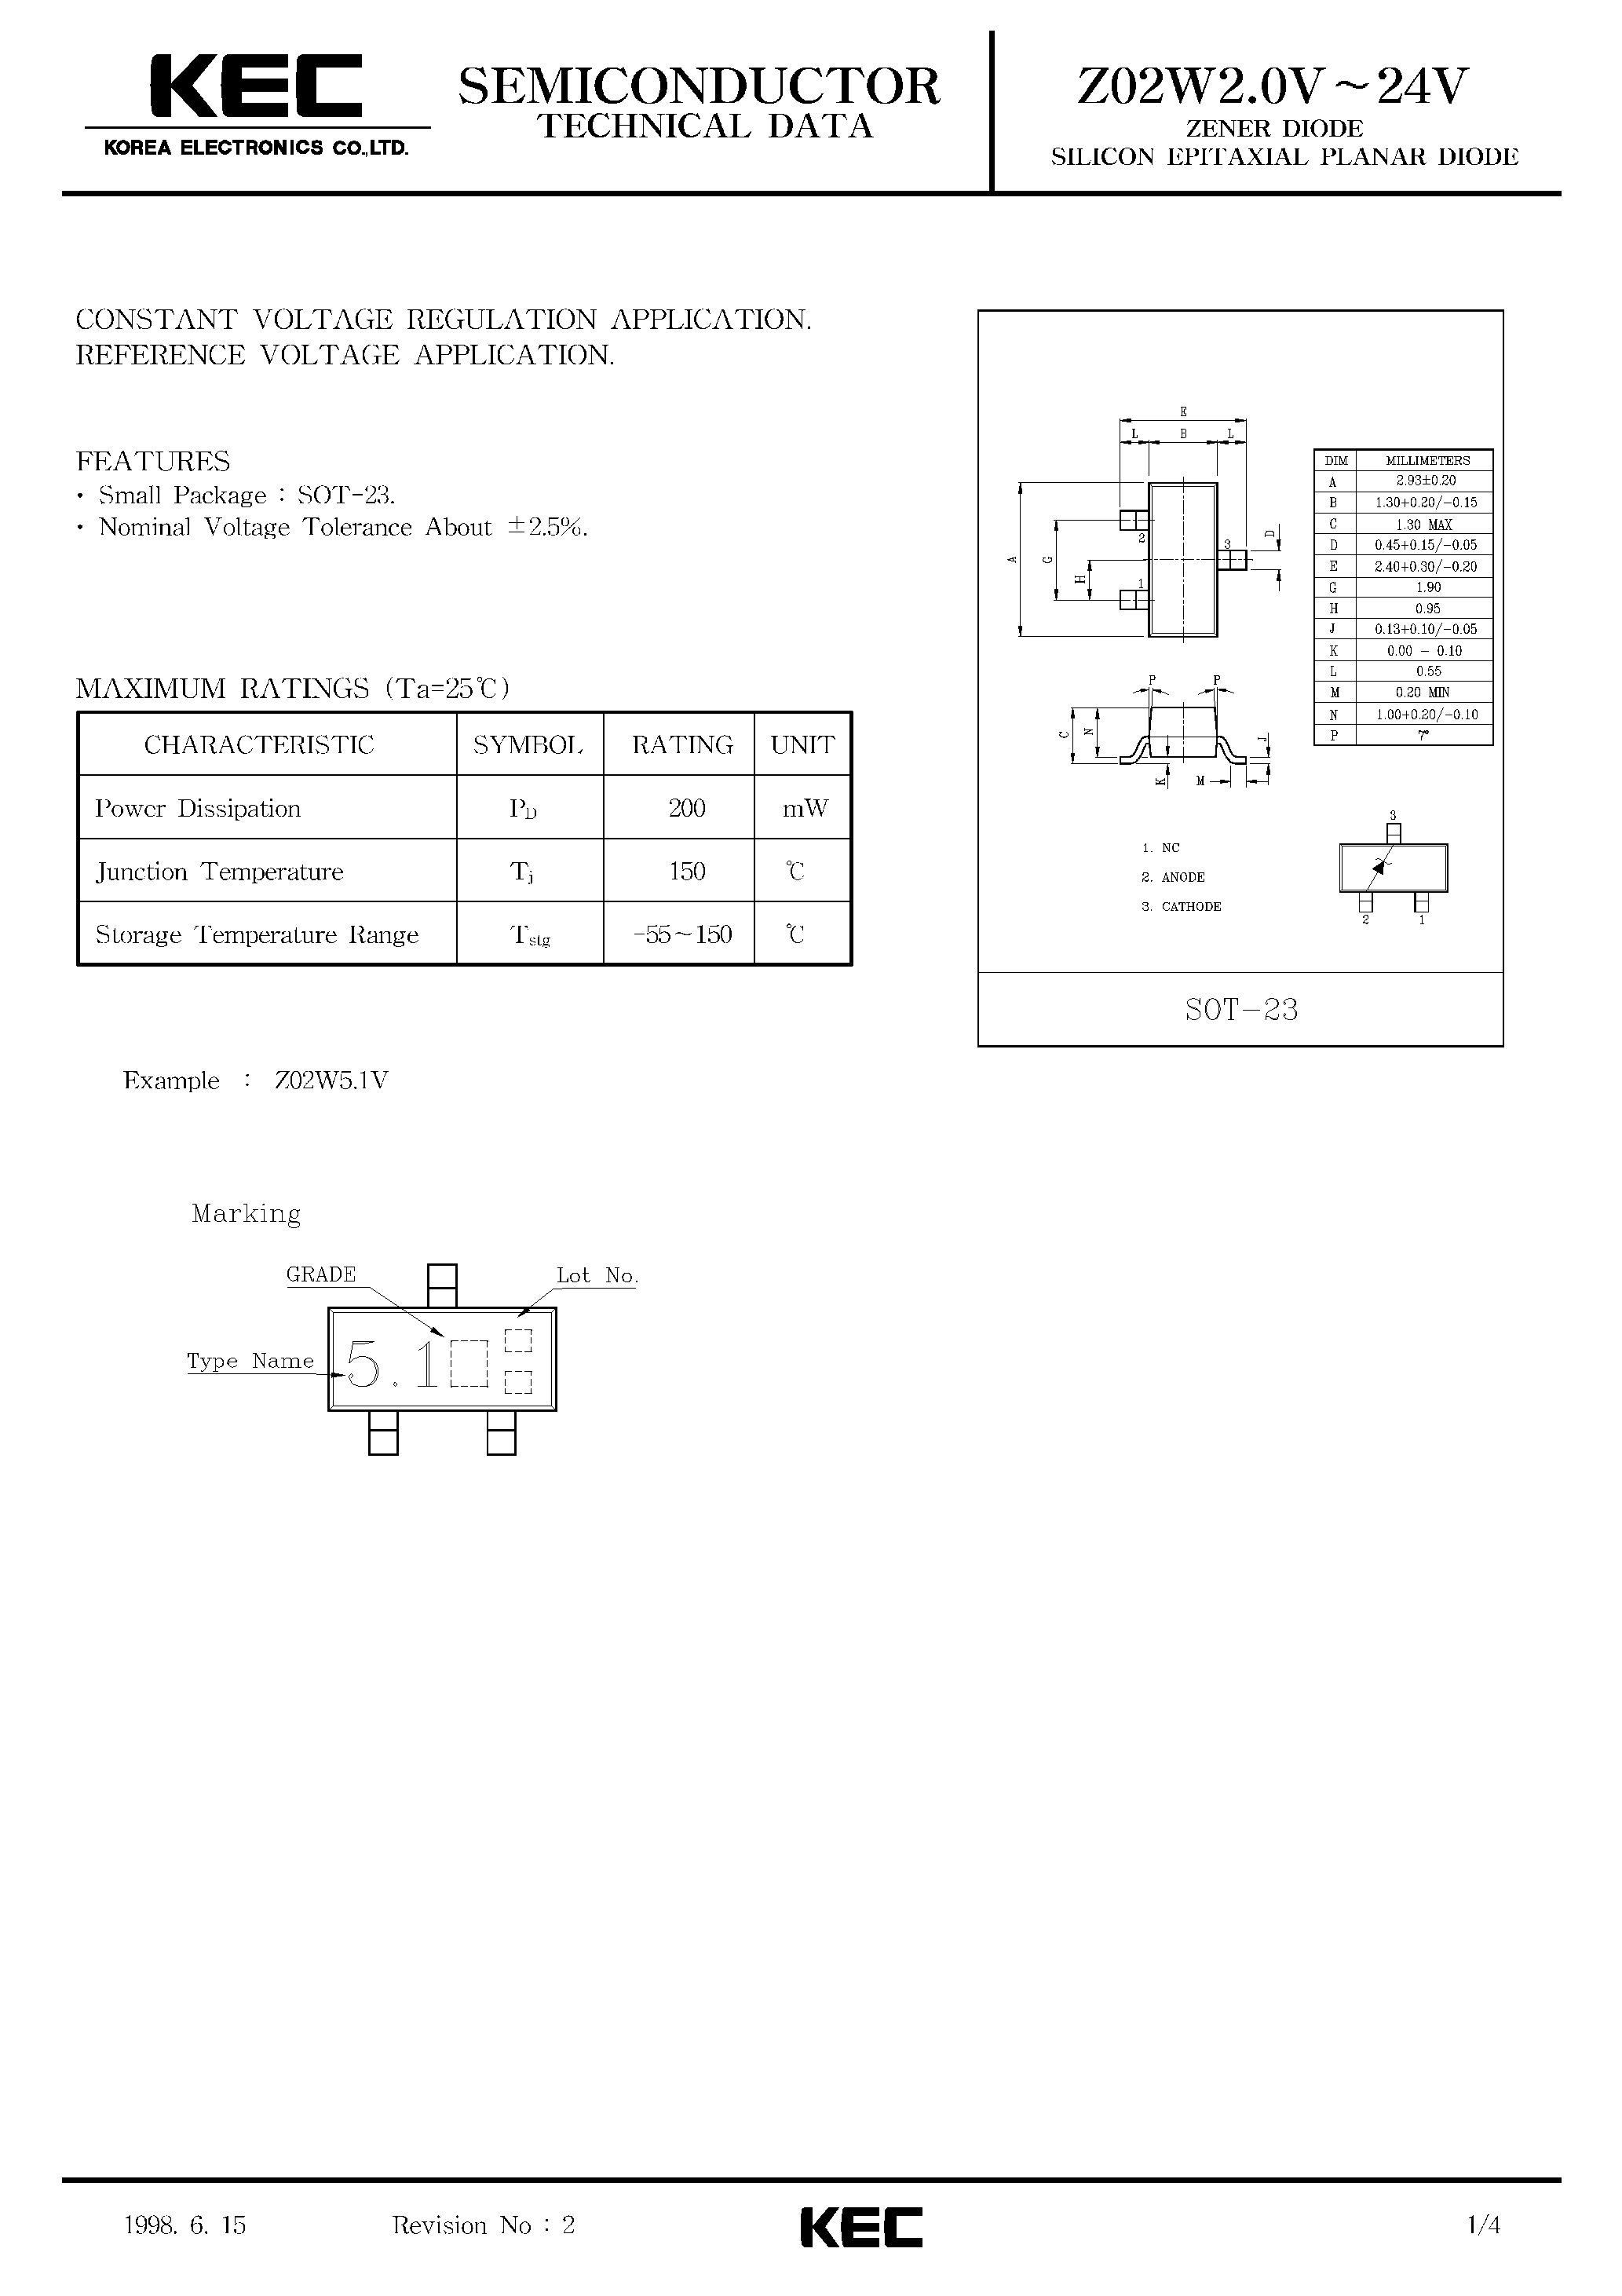 Datasheet Z02W30V - ZENER DIODE SILICON EPITAXIAL PLANAR DIODE (CONSTANT VOLTAGE REGULATION/ REFERENCE VOLTAGE) page 1